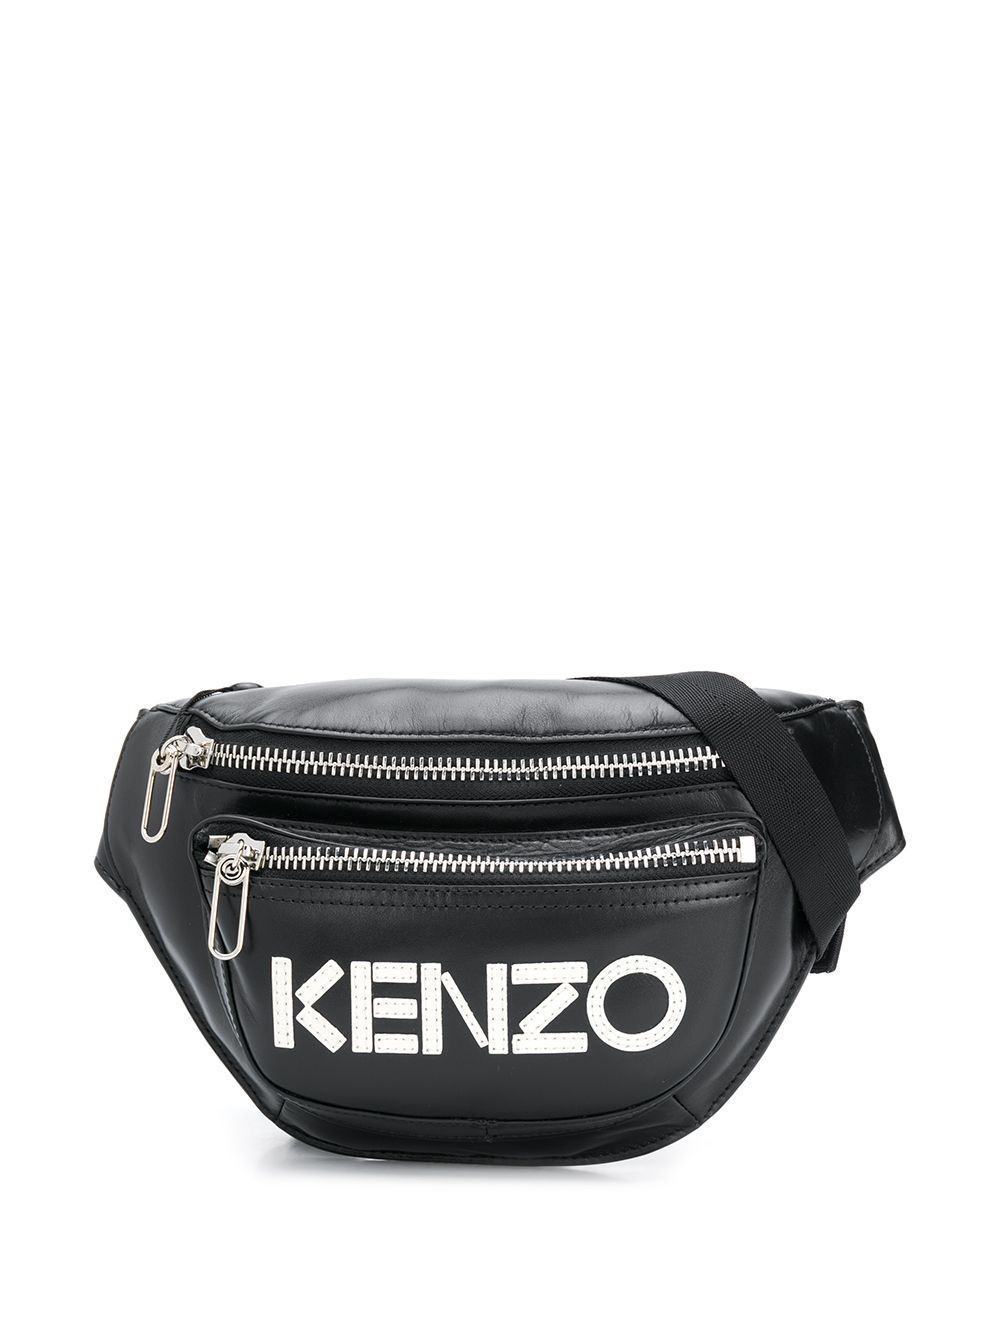 kenzo logo belt bag